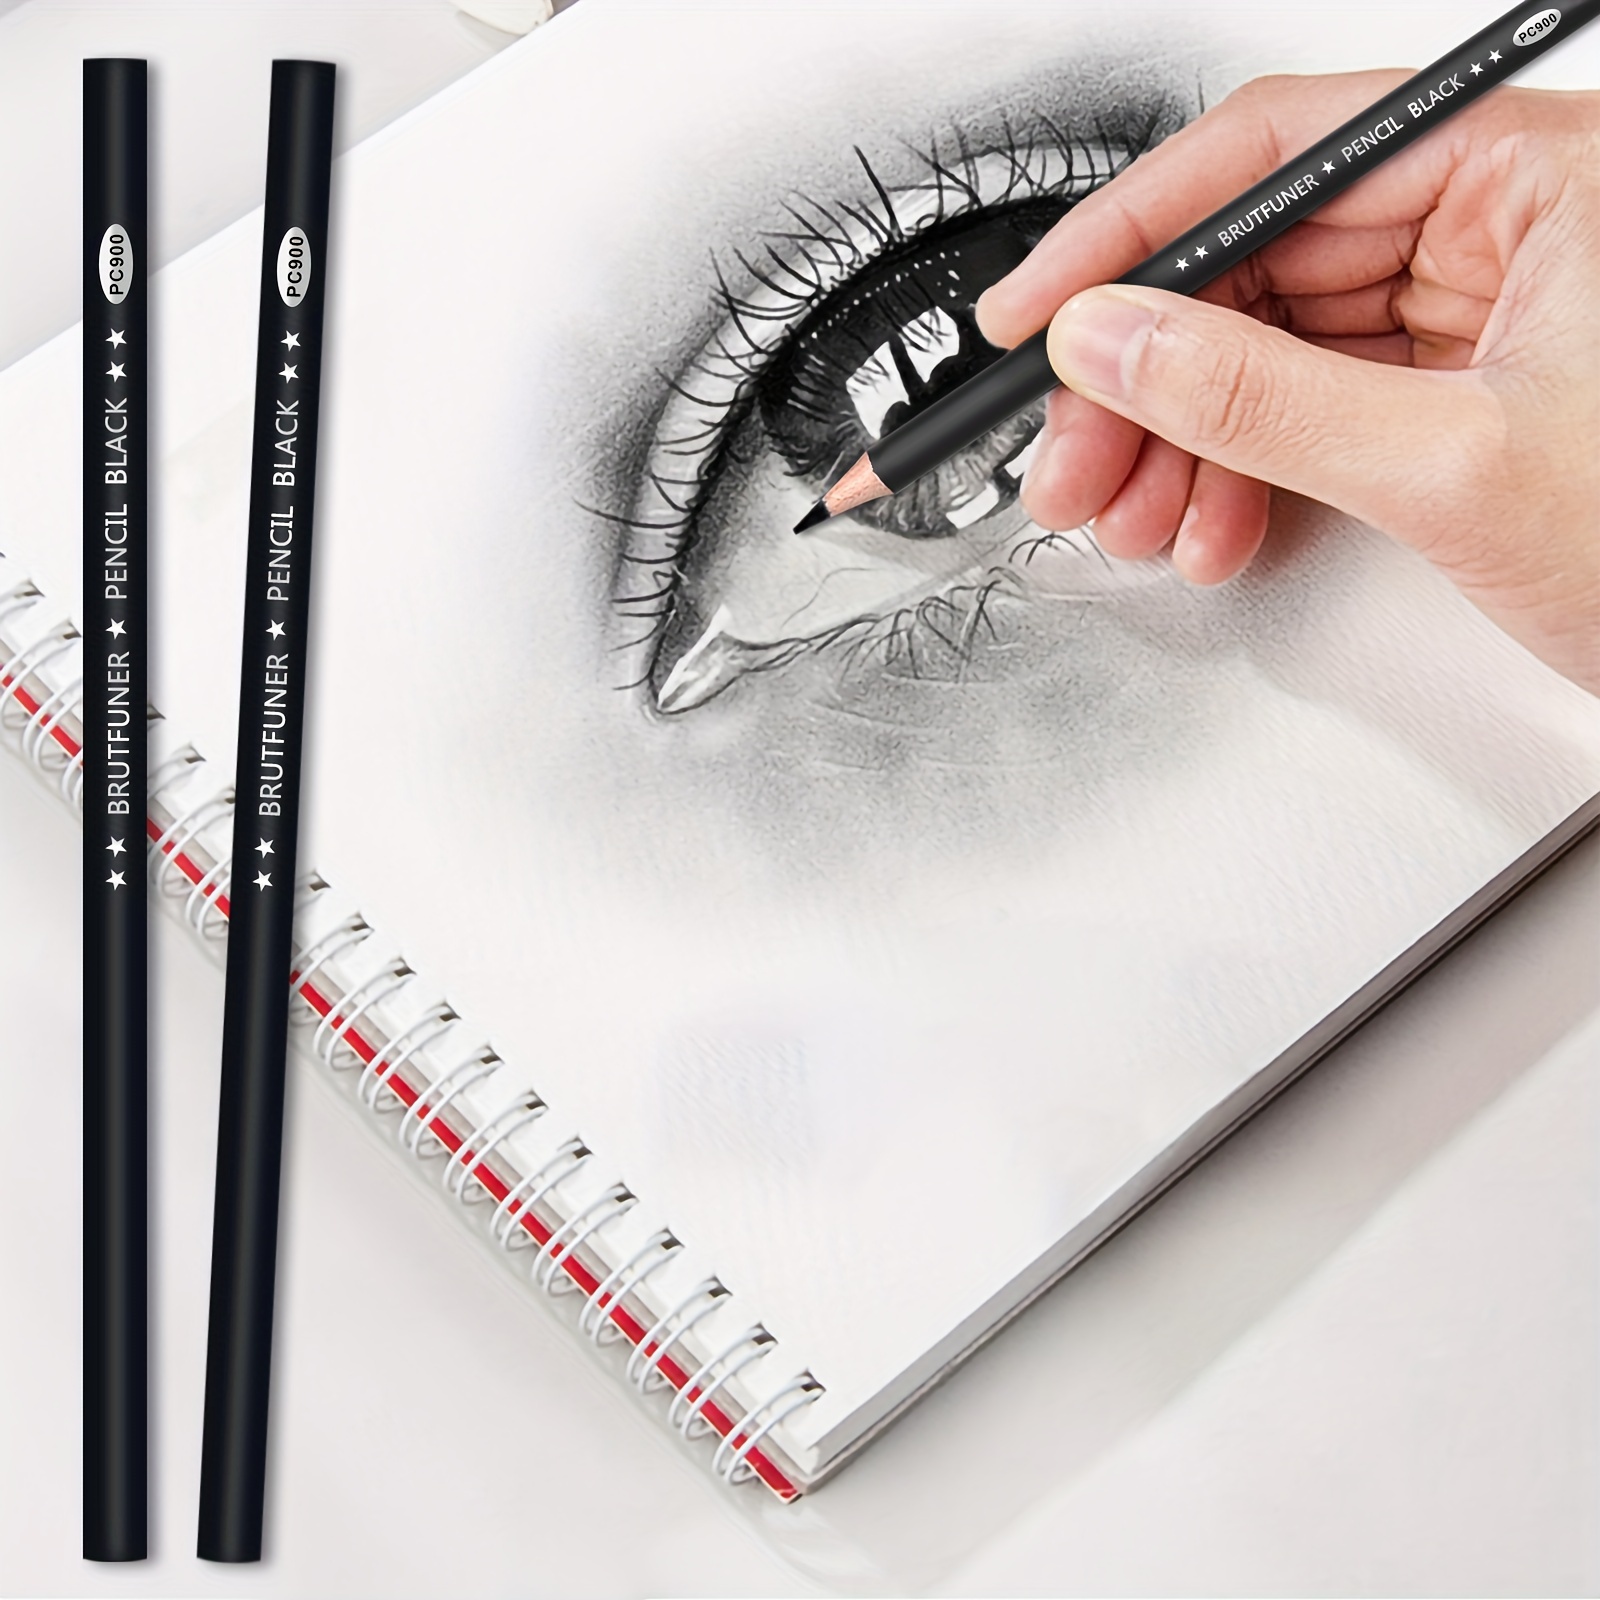 COROT 3Pcs White Sketch Charcoal Pencil Standard Pencil Drawing